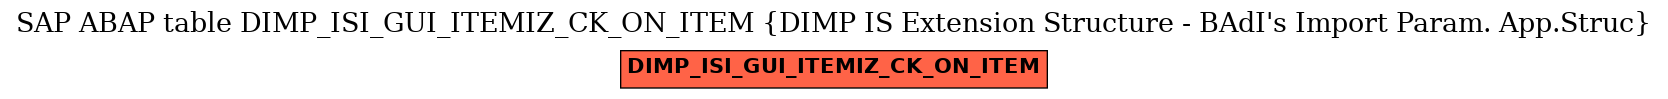 E-R Diagram for table DIMP_ISI_GUI_ITEMIZ_CK_ON_ITEM (DIMP IS Extension Structure - BAdI's Import Param. App.Struc)